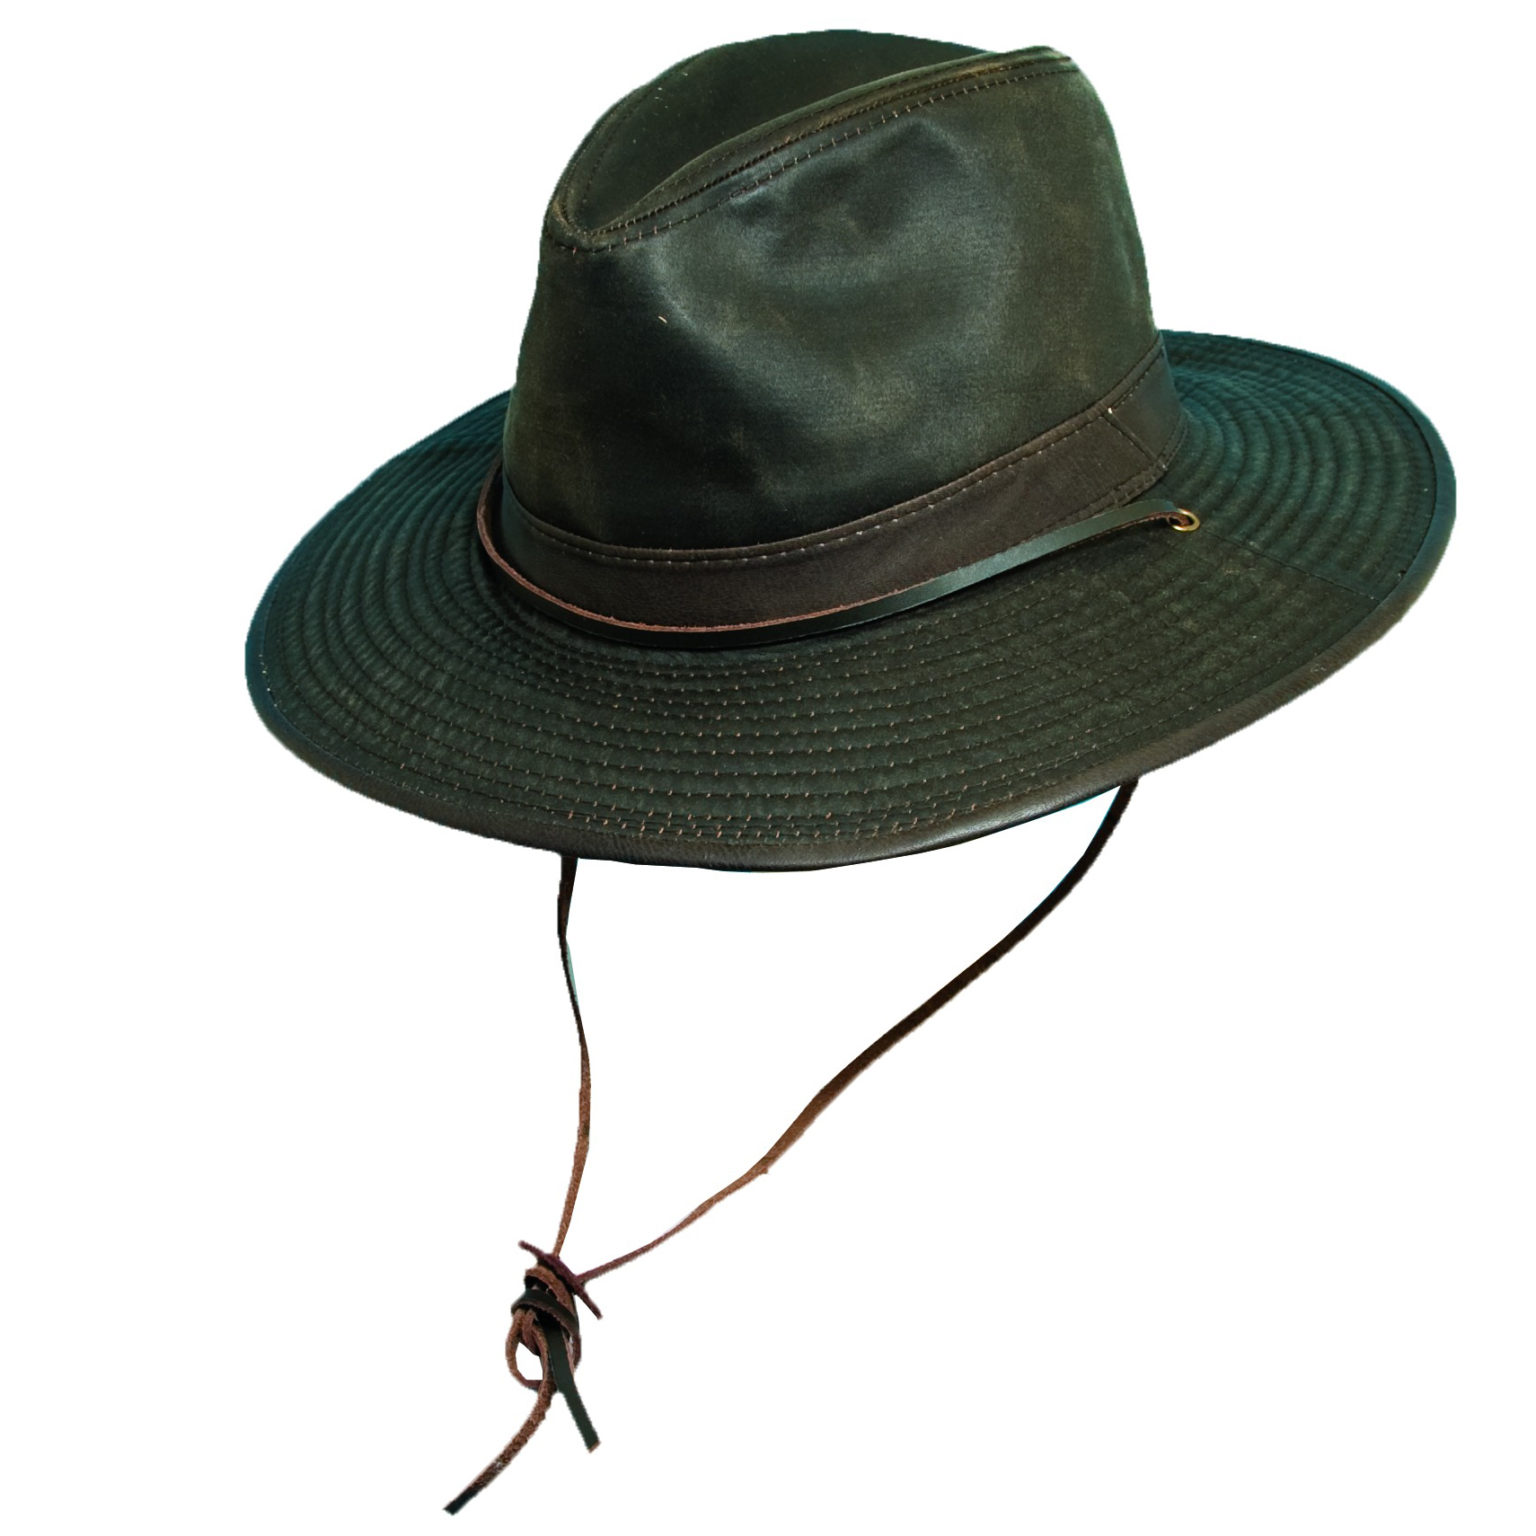 safari hats online india